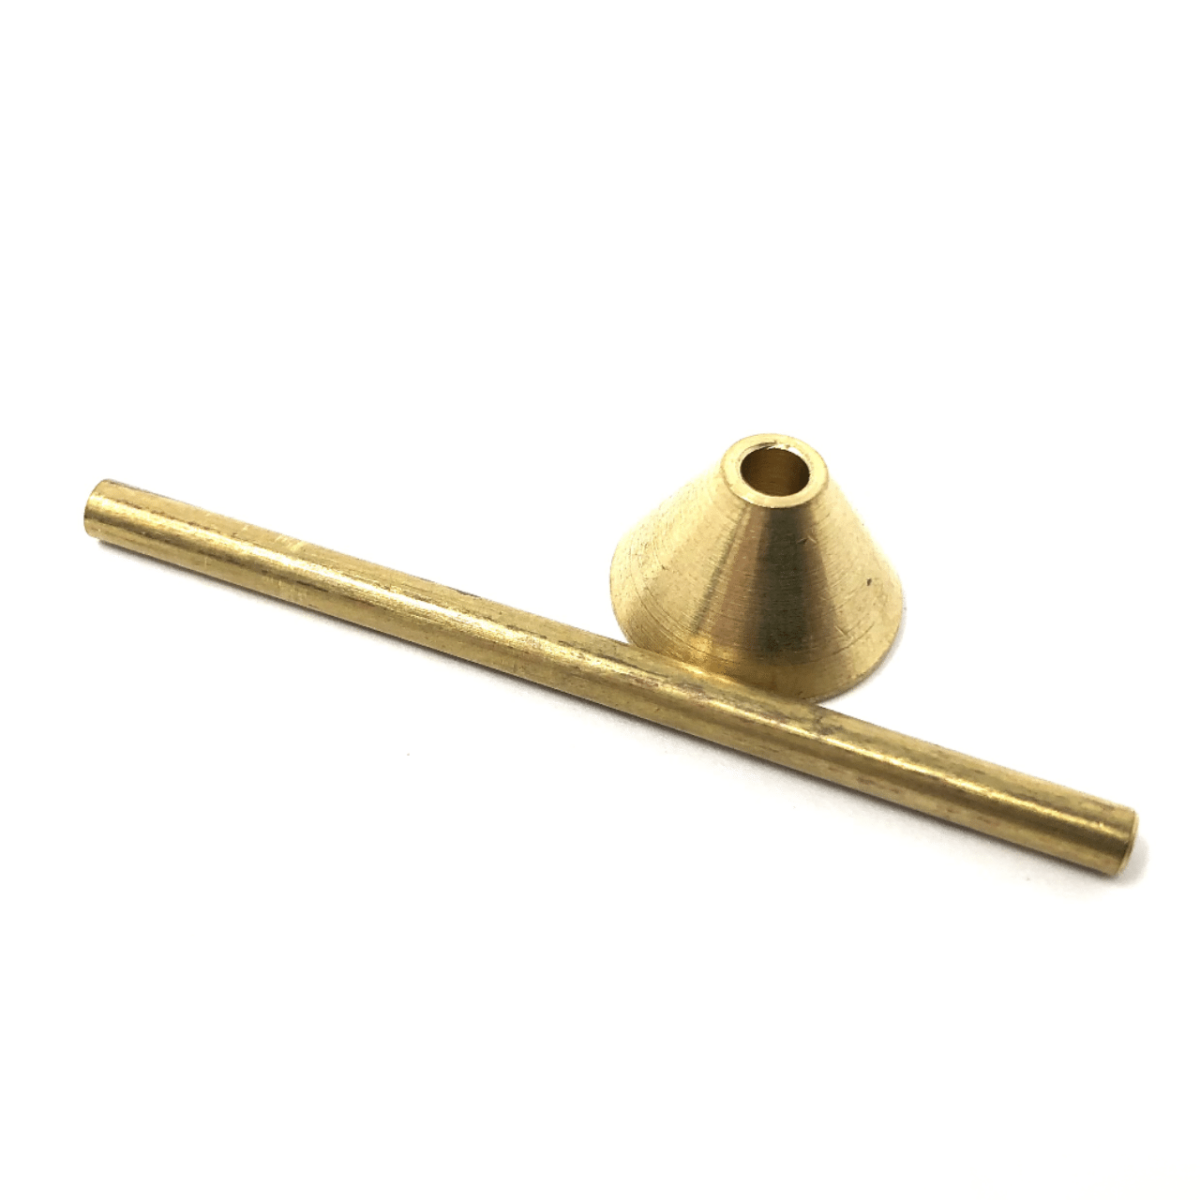 Brass Sprue Forming Mandrel Tool Sand Casting Wax Jewellery Making 194556588985 3 - Maddisons UK